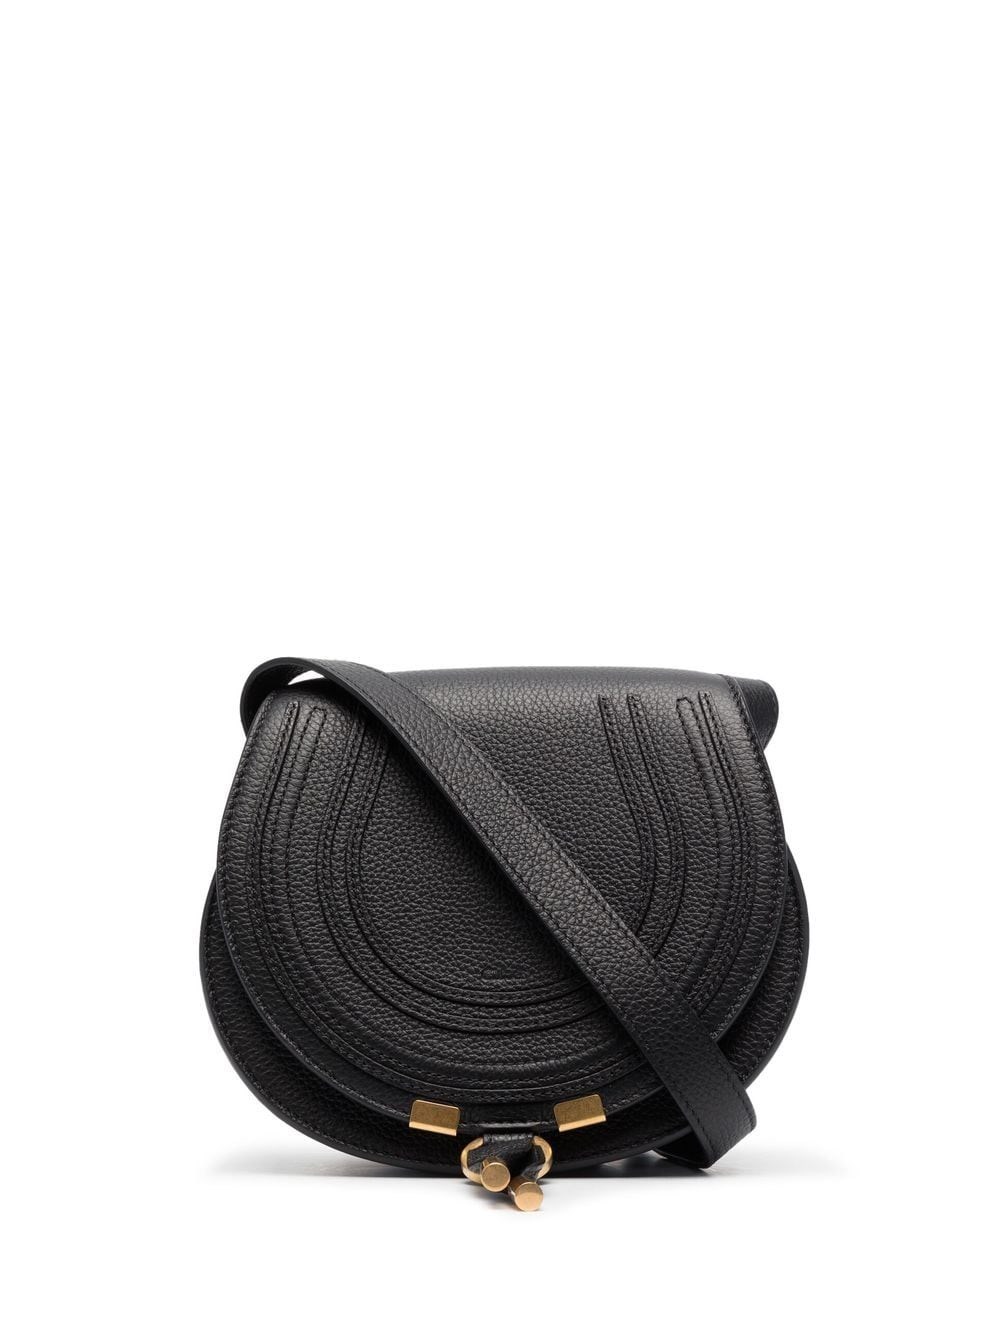 Chloé Marcie Small Leather Saddle Bag Black